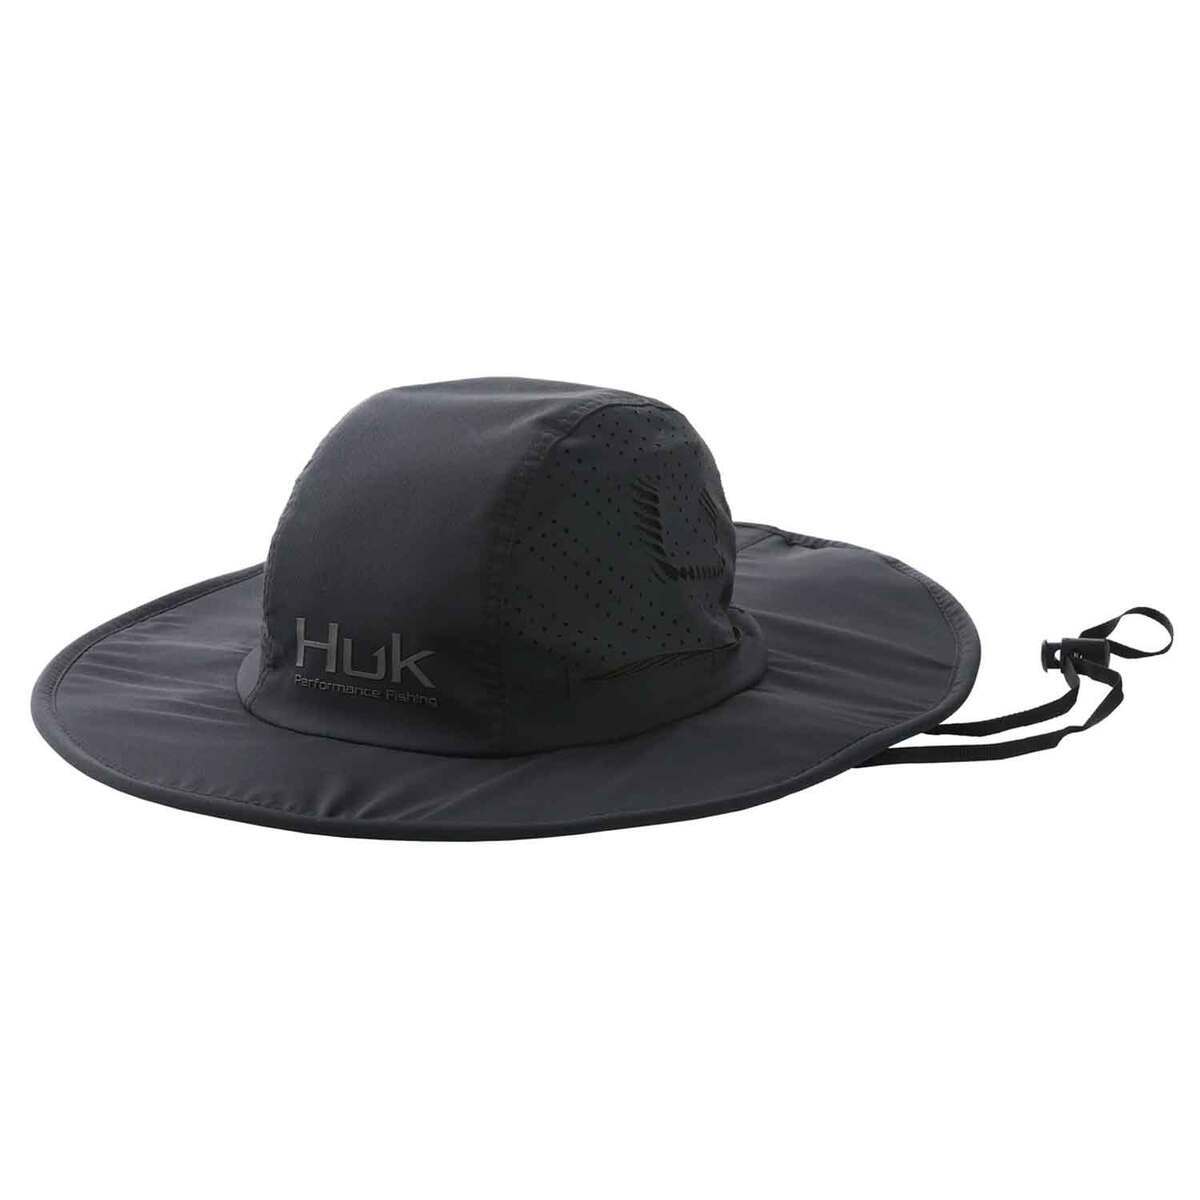 https://www.sportsmans.com/medias/huk-mens-a1a-sun-hat-black-one-size-fits-all-1708961-3.jpg?context=bWFzdGVyfGltYWdlc3wzMjE4MXxpbWFnZS9qcGVnfGFEZGtMMmhqWXk4eE1EUTNNamt6TWpJeE1qYzJOaTh4TnpBNE9UWXhMVE5mWW1GelpTMWpiMjUyWlhKemFXOXVSbTl5YldGMFh6RXlNREF0WTI5dWRtVnljMmx2YmtadmNtMWhkQXw3M2NhNzUwMzRhY2VjYmMzYTk2NzM0OTY5N2Q5ZjYxM2E2MmFlYTgyZWM1MDgyZWJjYmZhYWE1YmI5N2ViNTM3